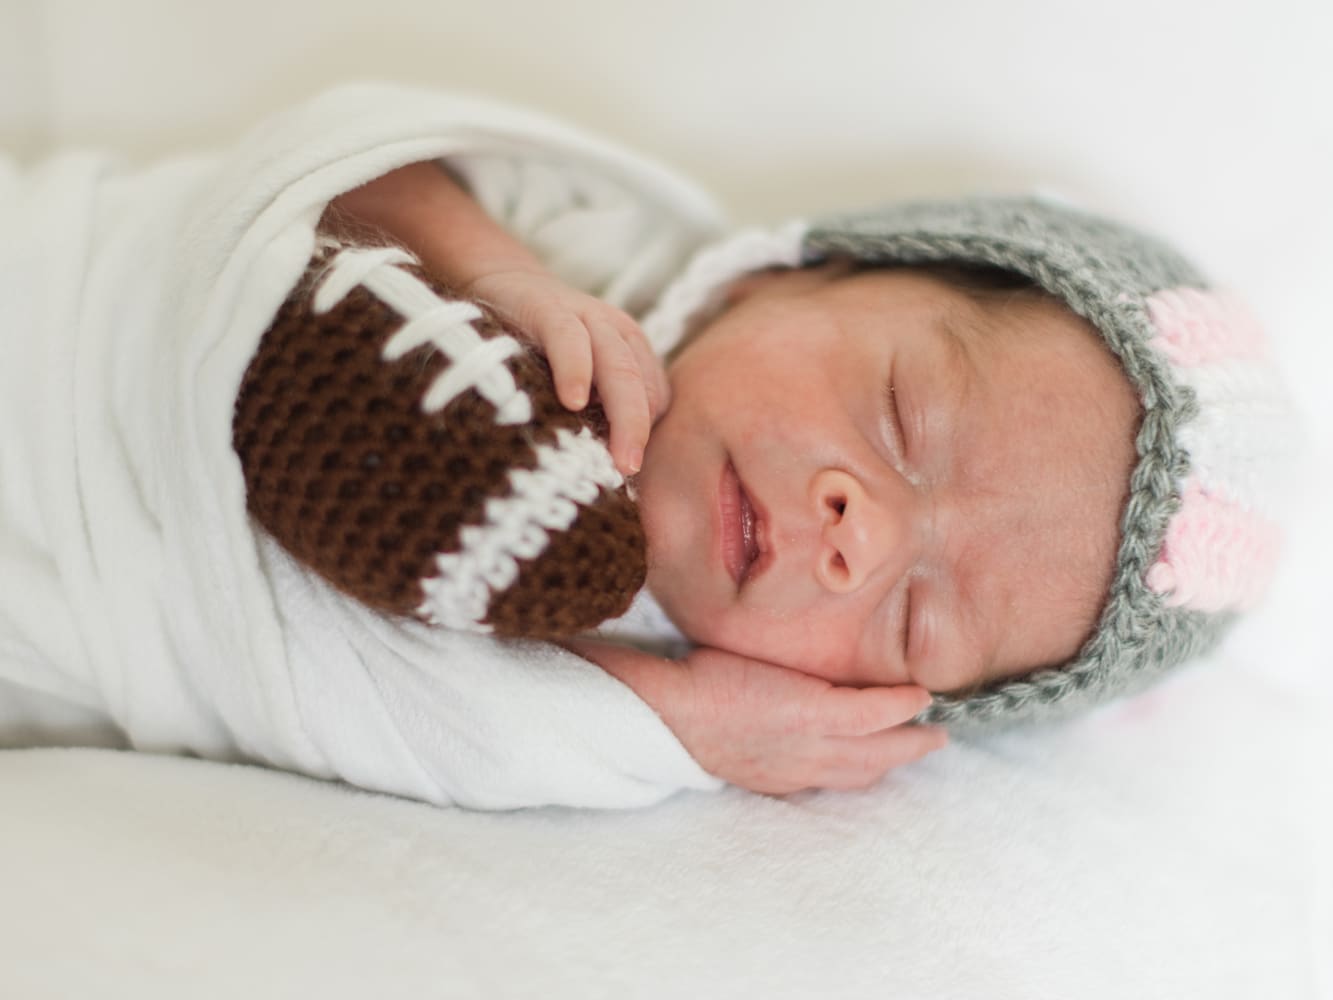 Baby in the NICU wearing a crochet football helmet.